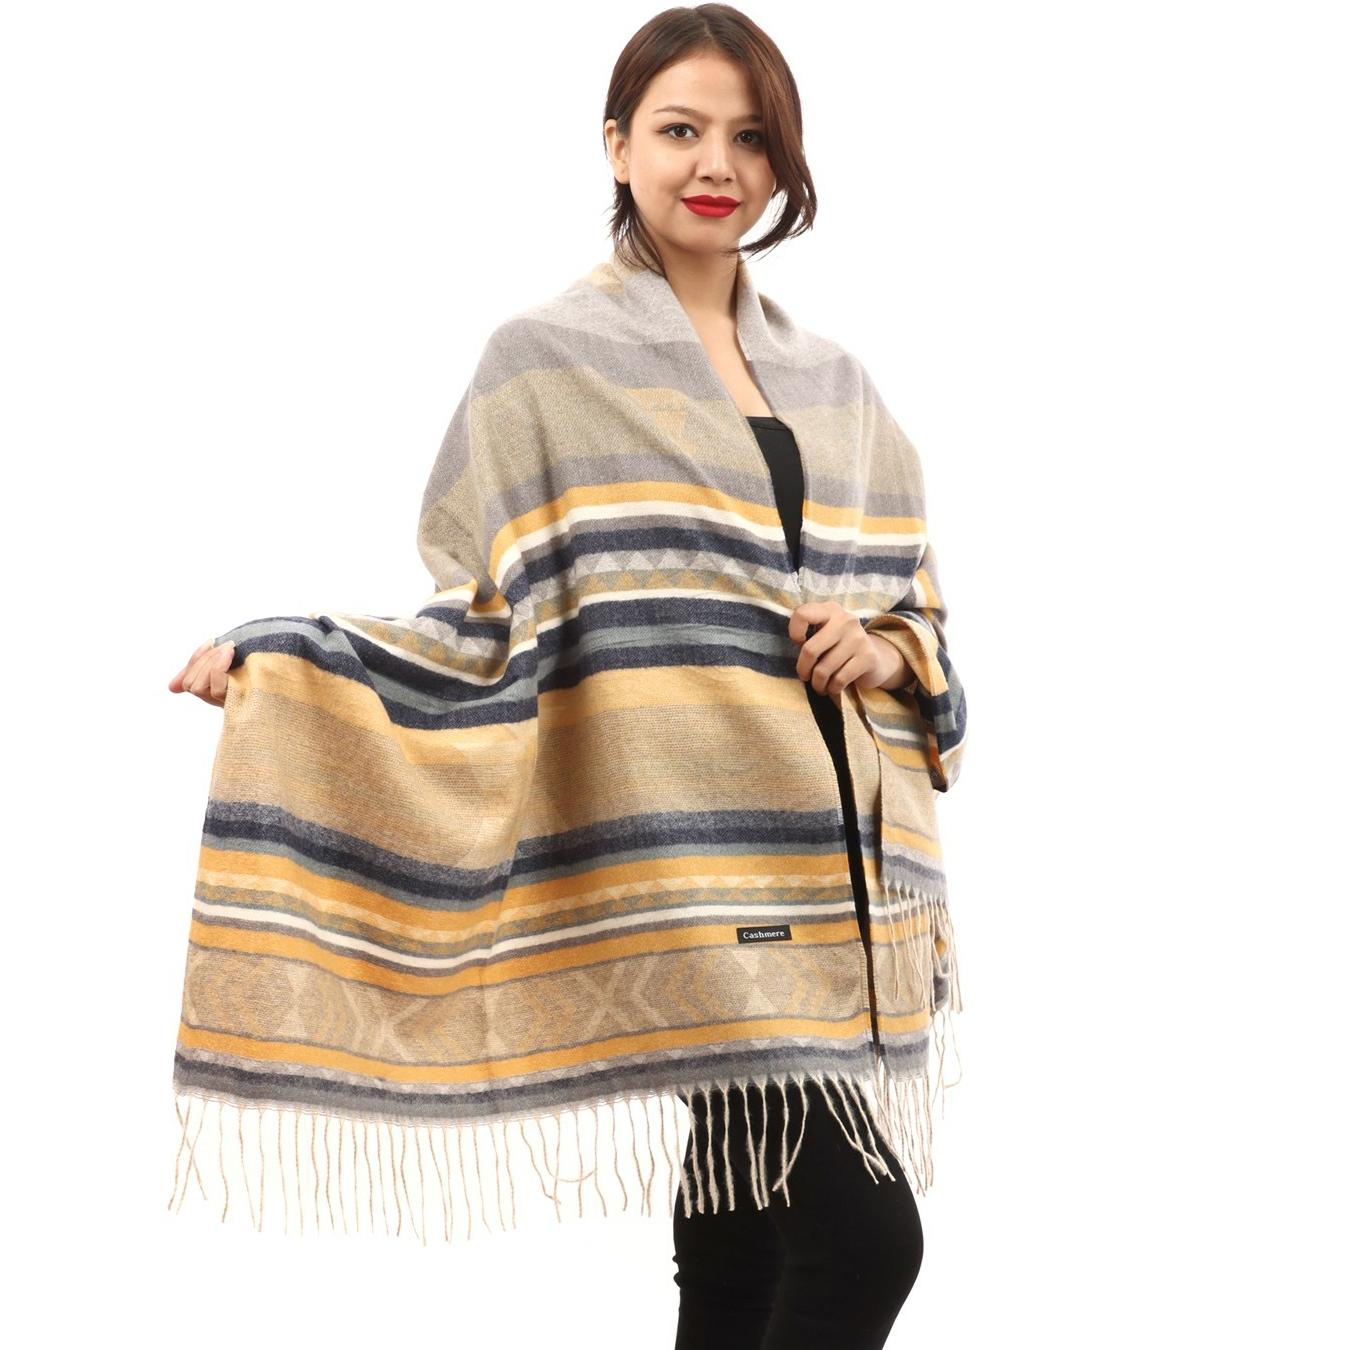 Dhaka design Acrylic shawl